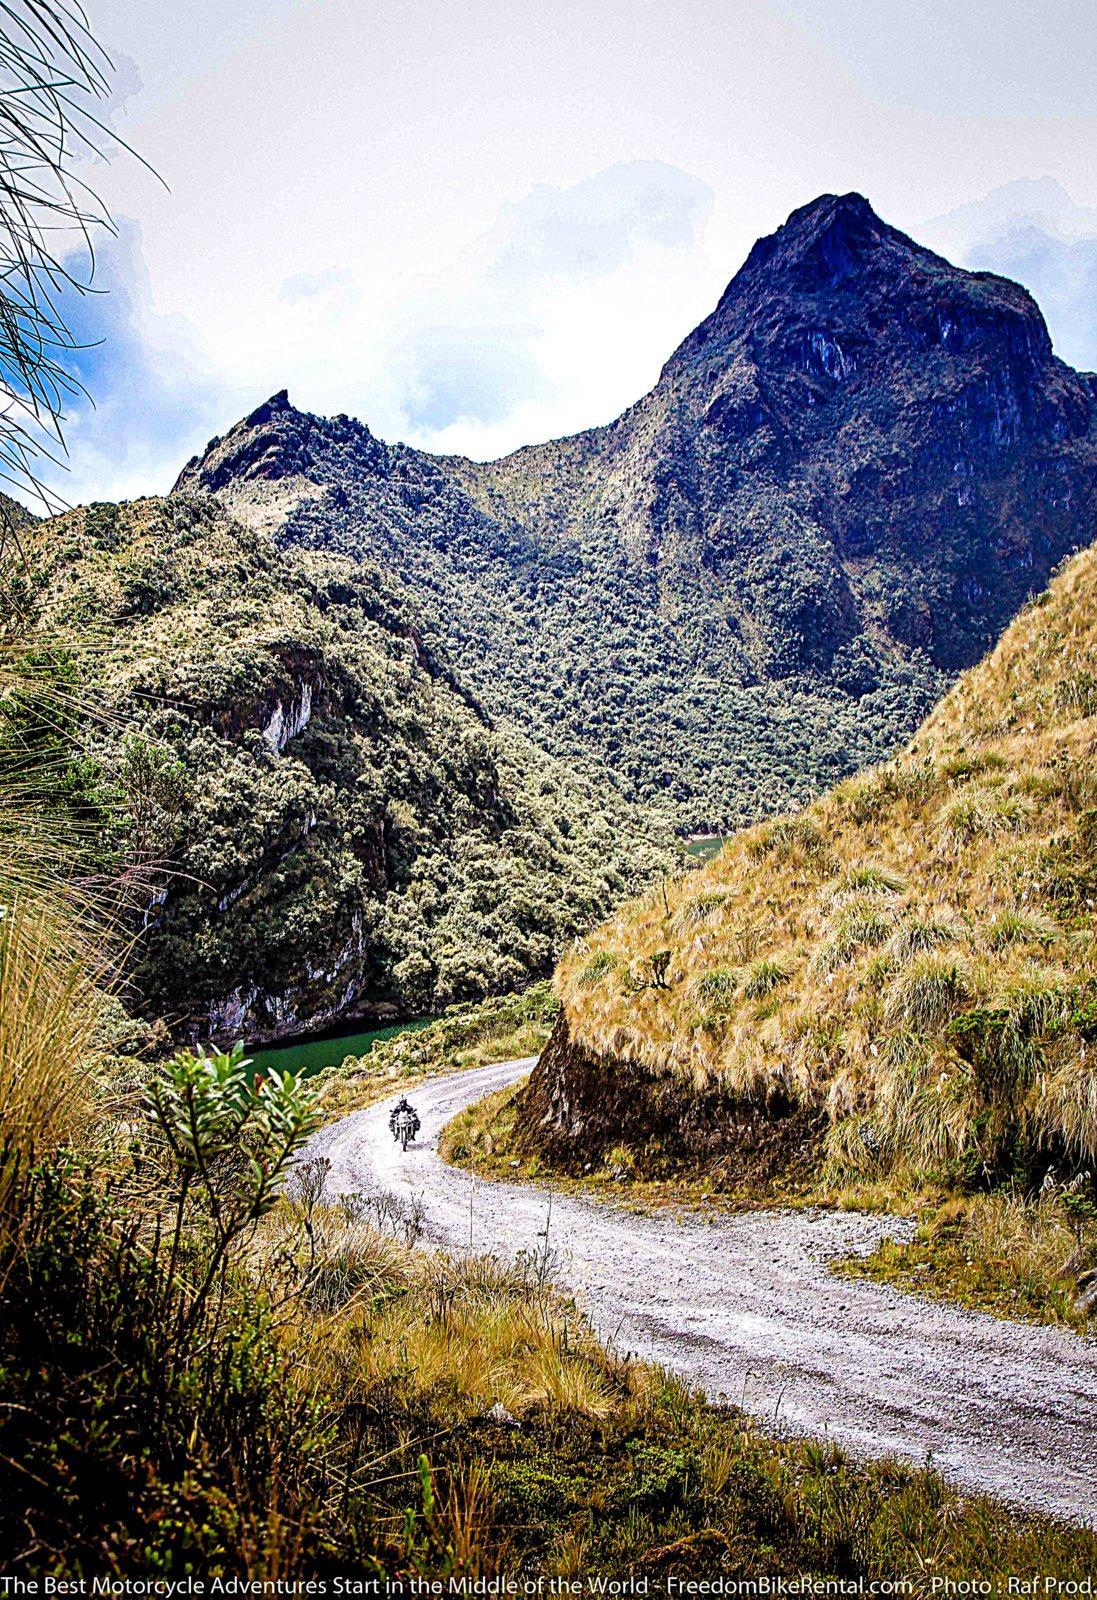 The Coca Cayambe Park in Ecuador - an adventure motorcyclist dream ride